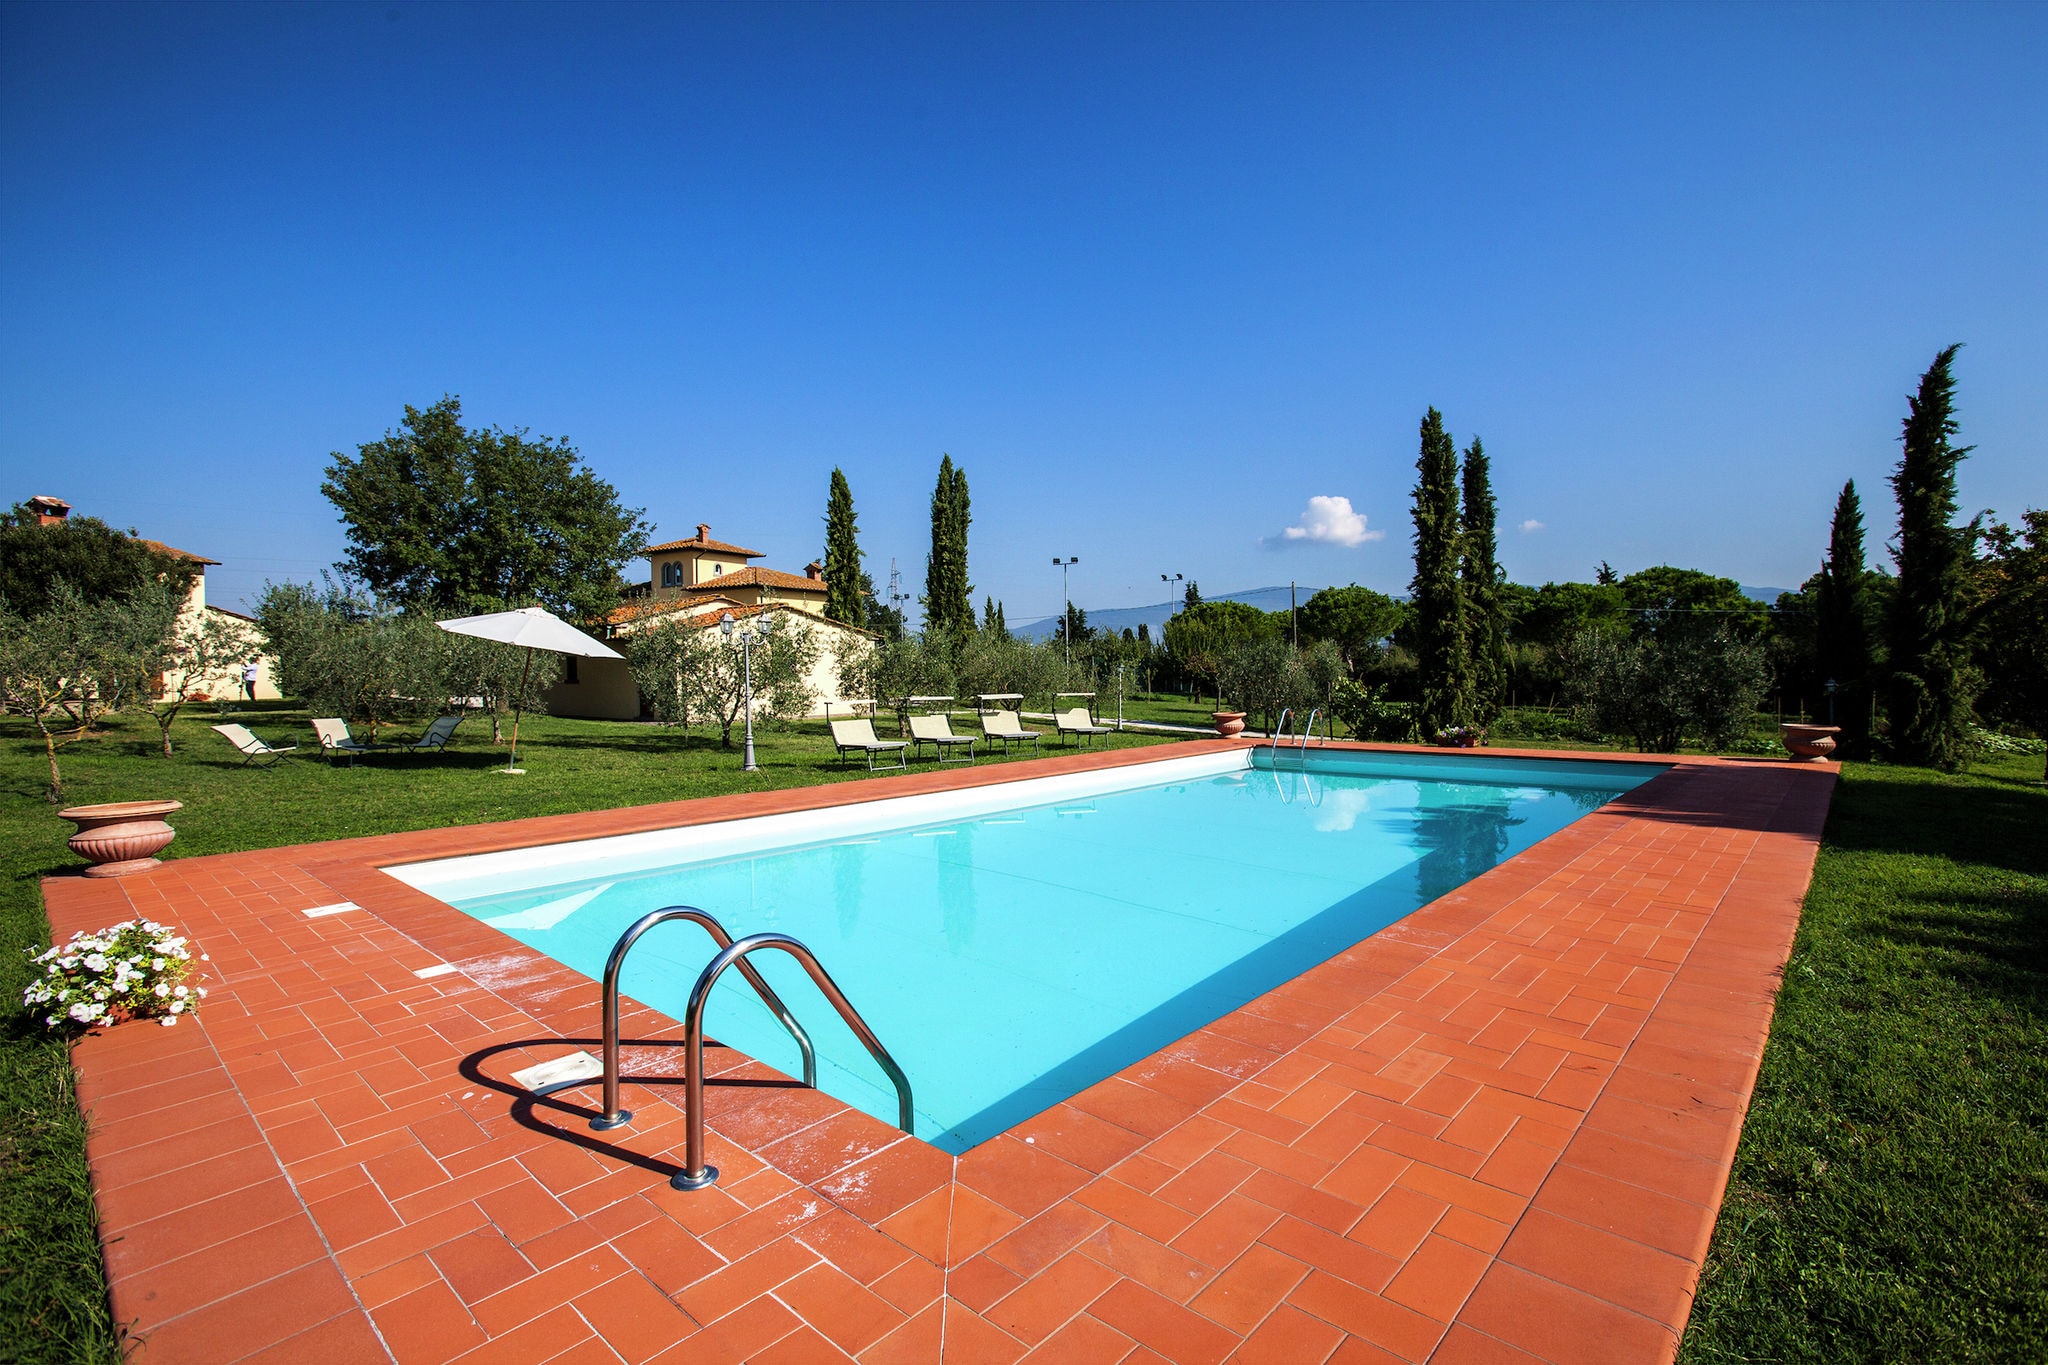 Villa with spacious garden, swimming pool, bubble bath and tennis court, near Cortona